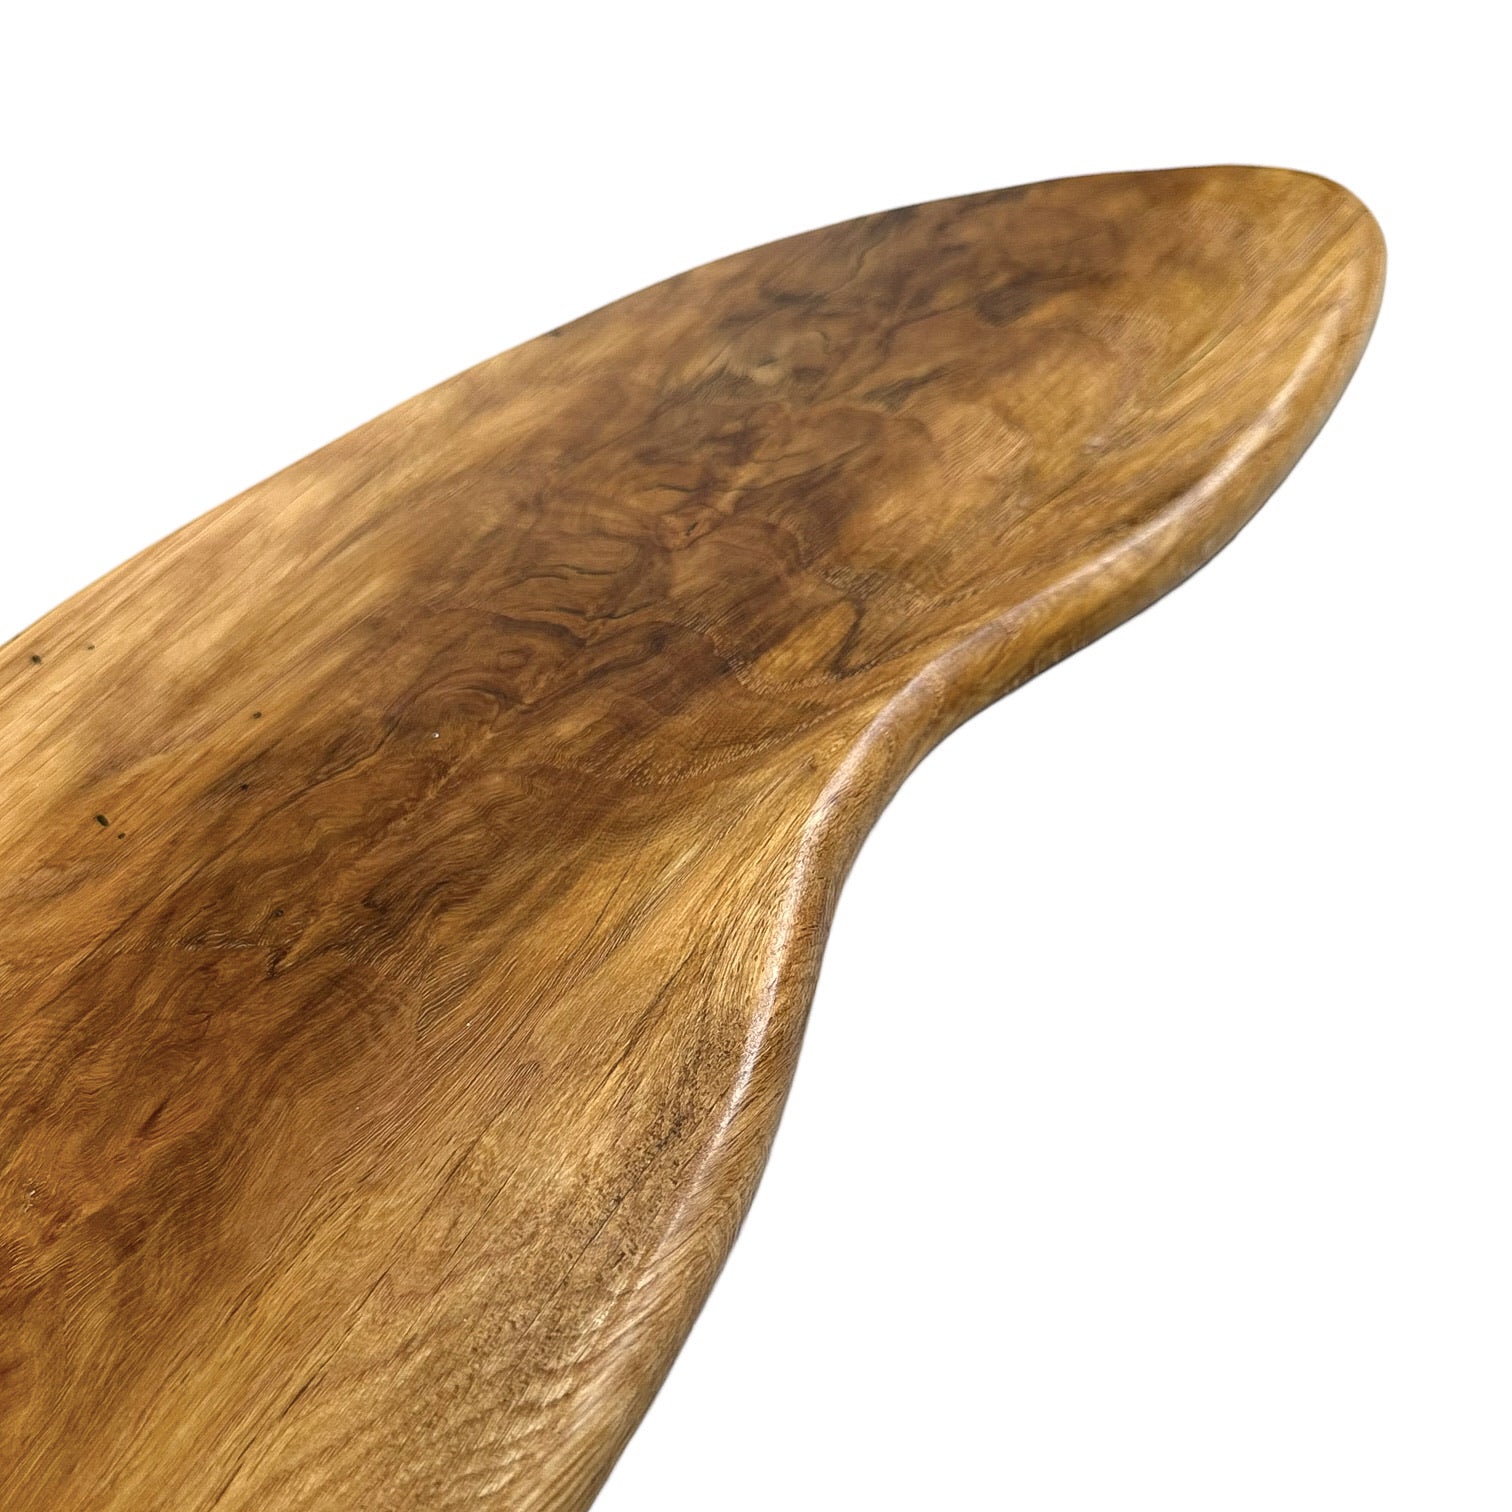 Rustic Oak - Handmade Wooden Charcuterie Boards - RTS style 3 wood grain detail view